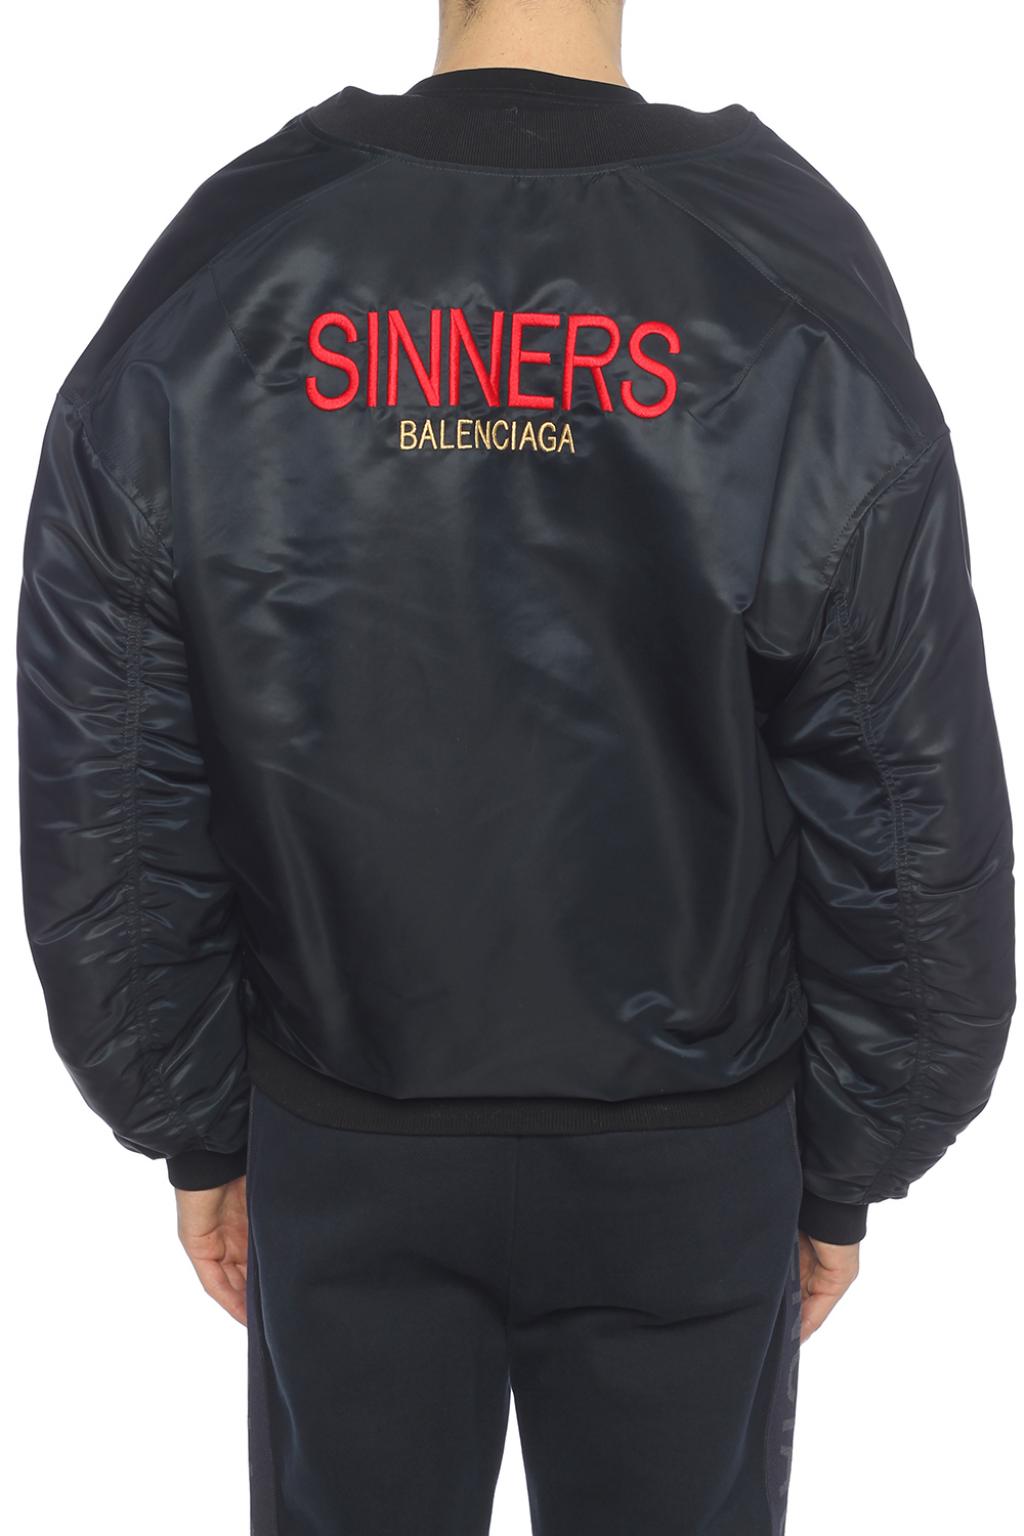 balenciaga sinners bomber jacket